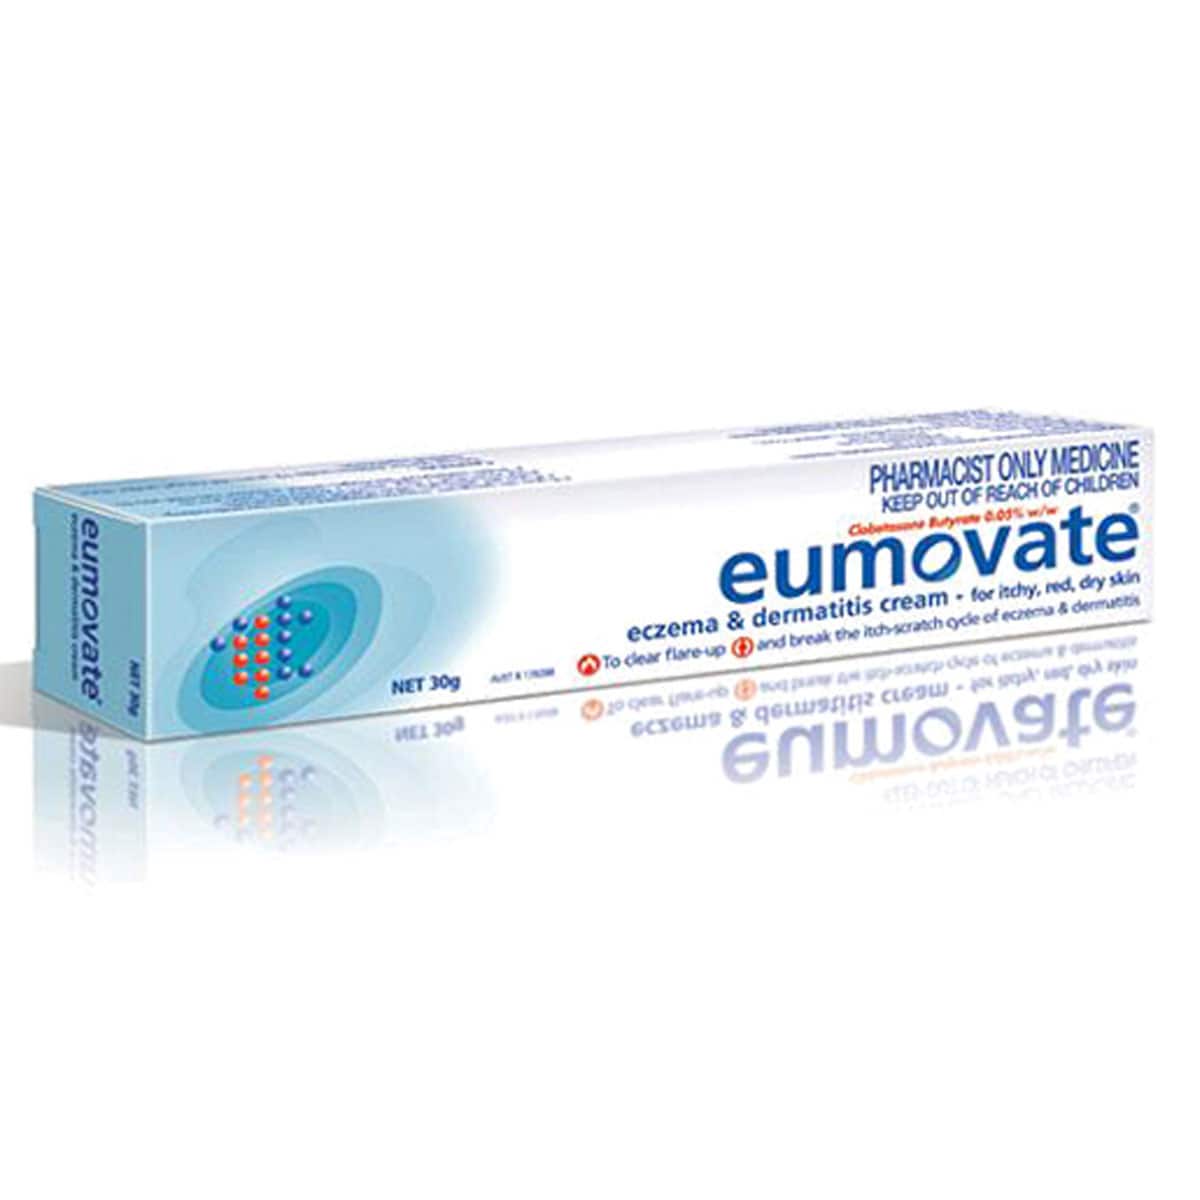 Eumovate Clobetasone (0.05%) Eczema & Dermatitis Cream 30g